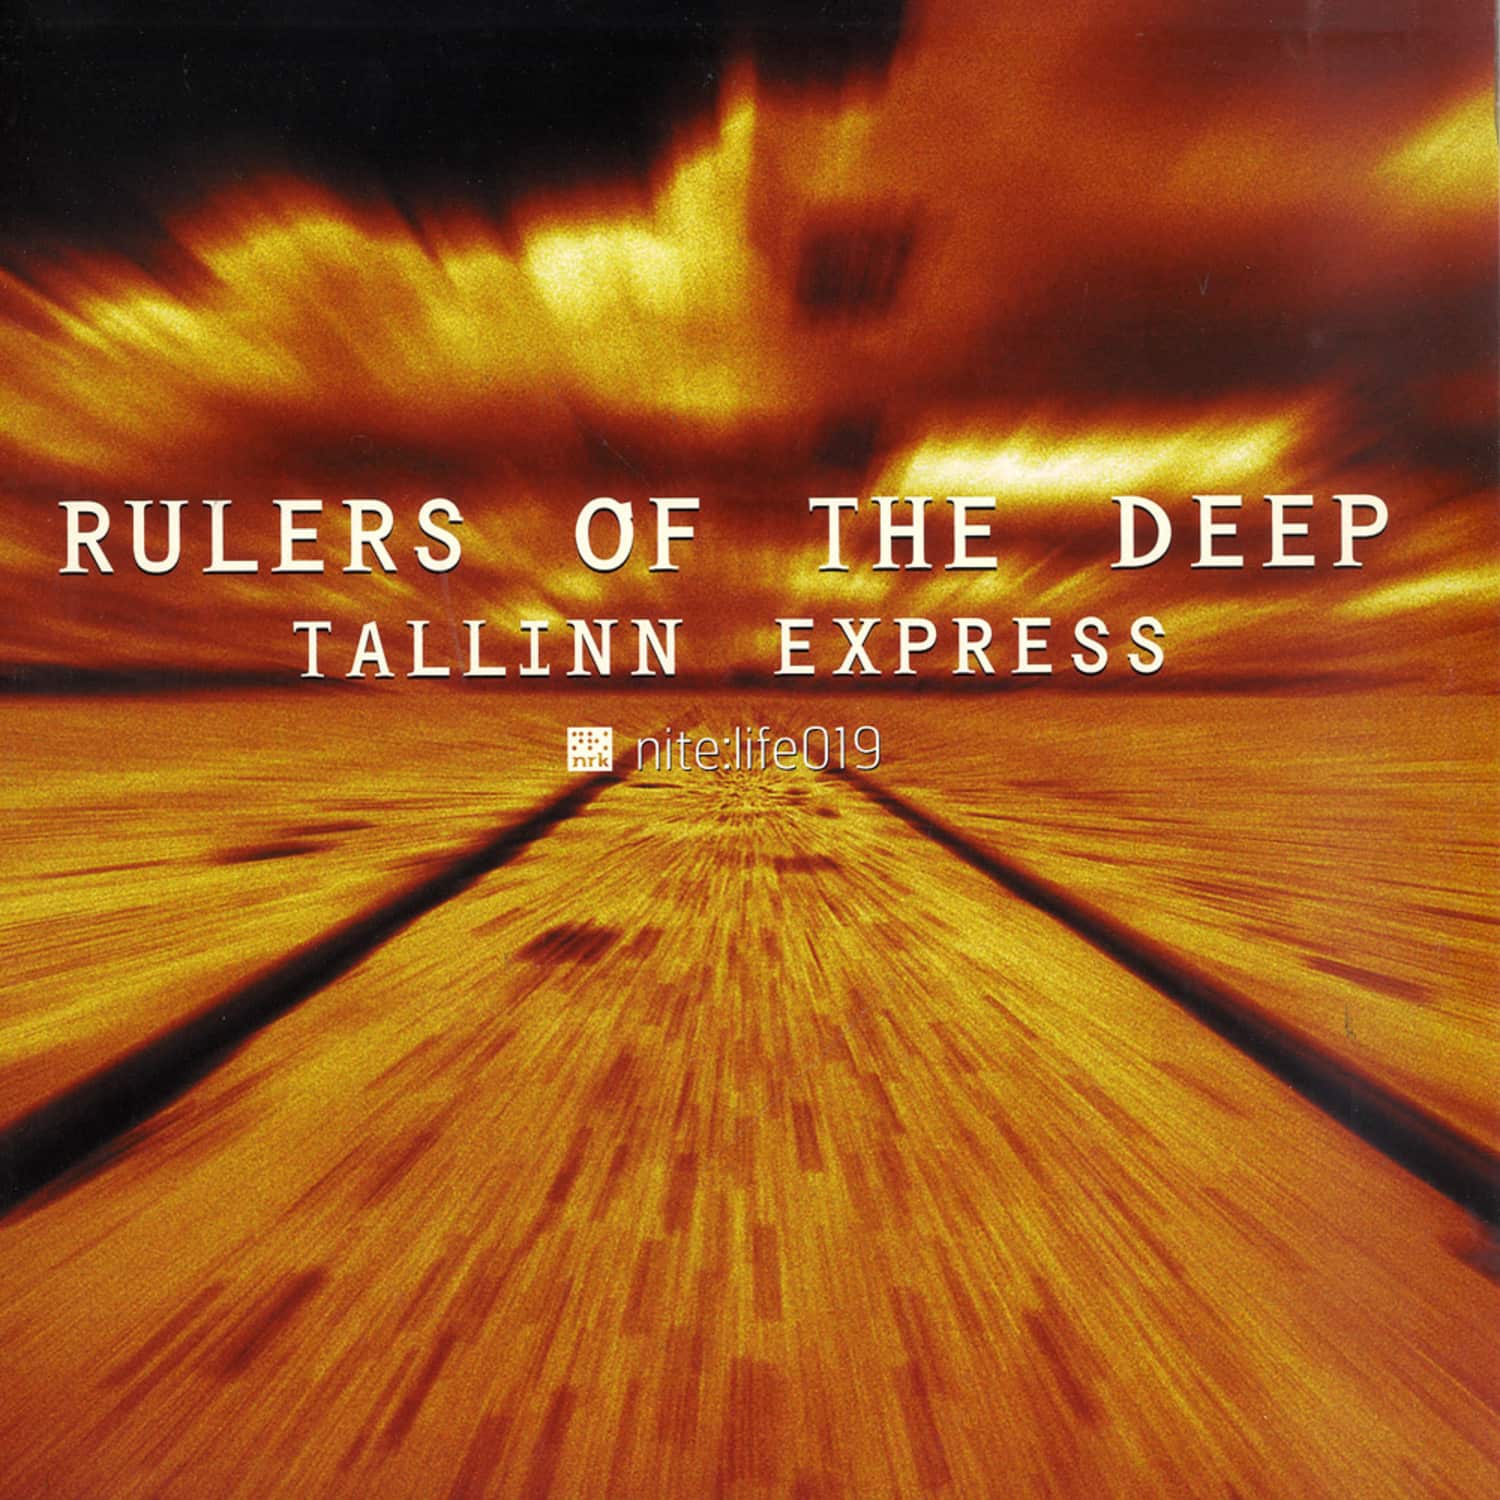 Rulers of the Deep - Tallinn Express - Nite:life019 